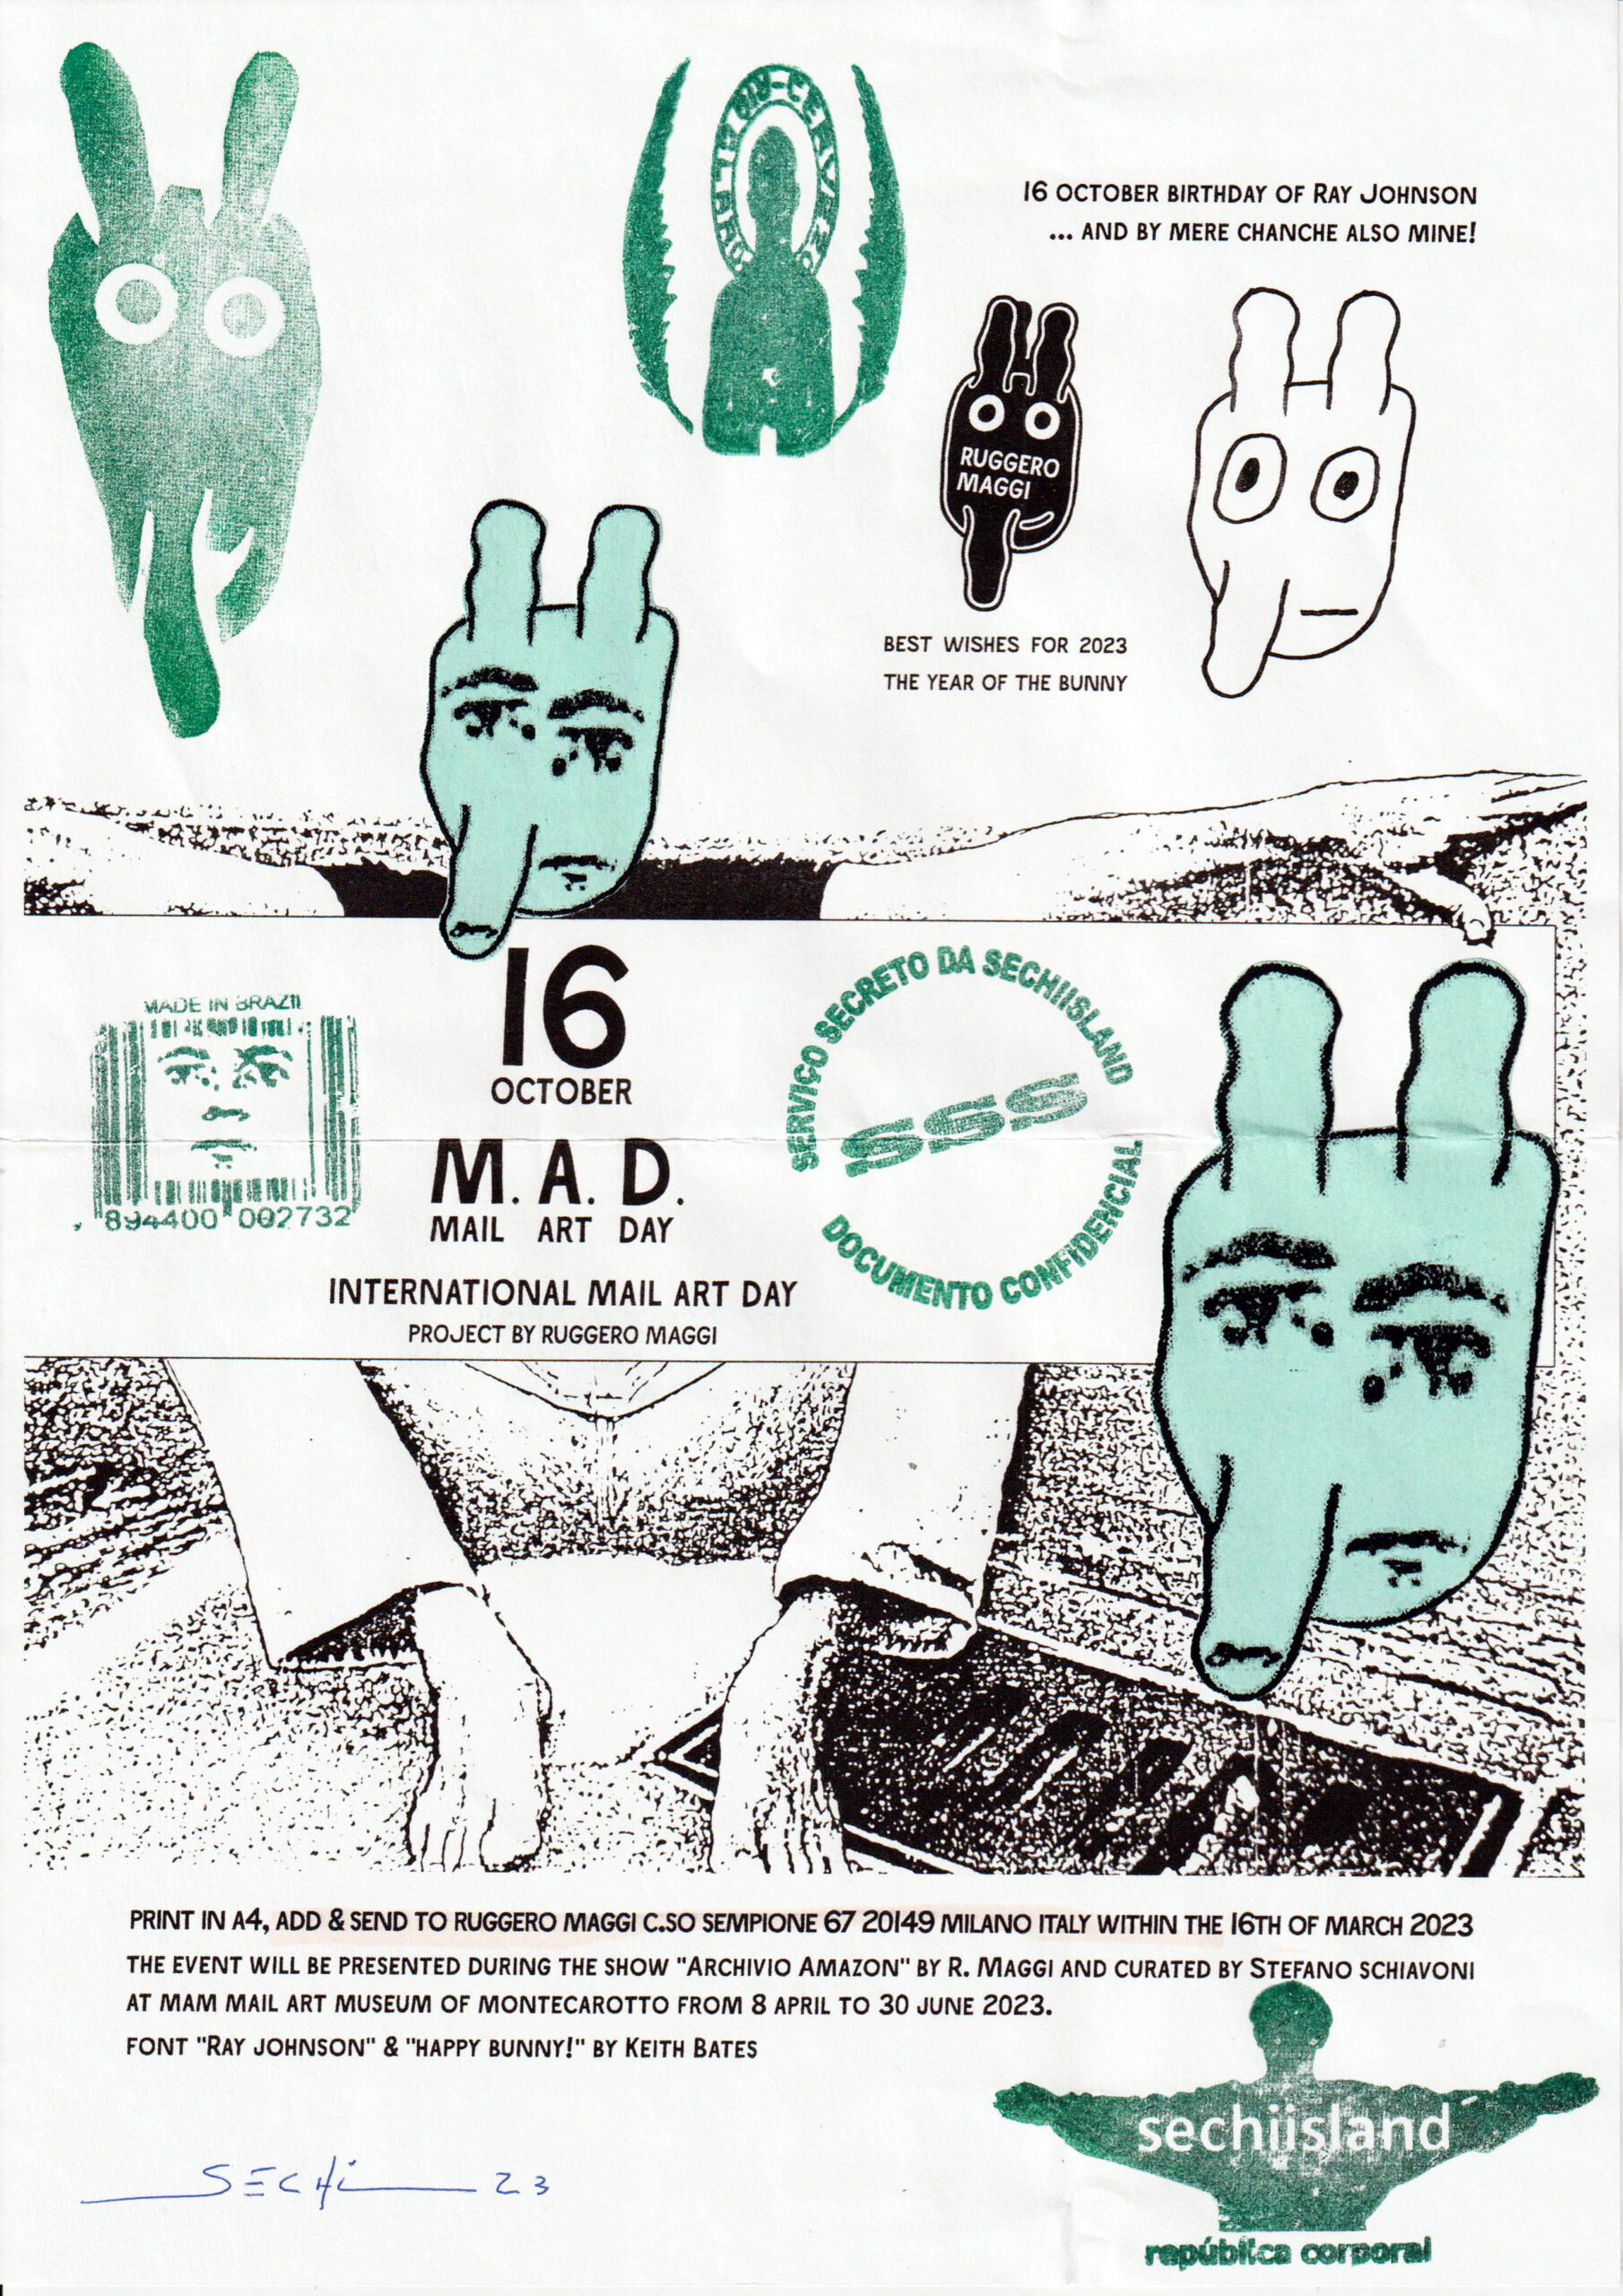 M.A.D. - Mail Art Day: José Roberto Sechi, Brazil